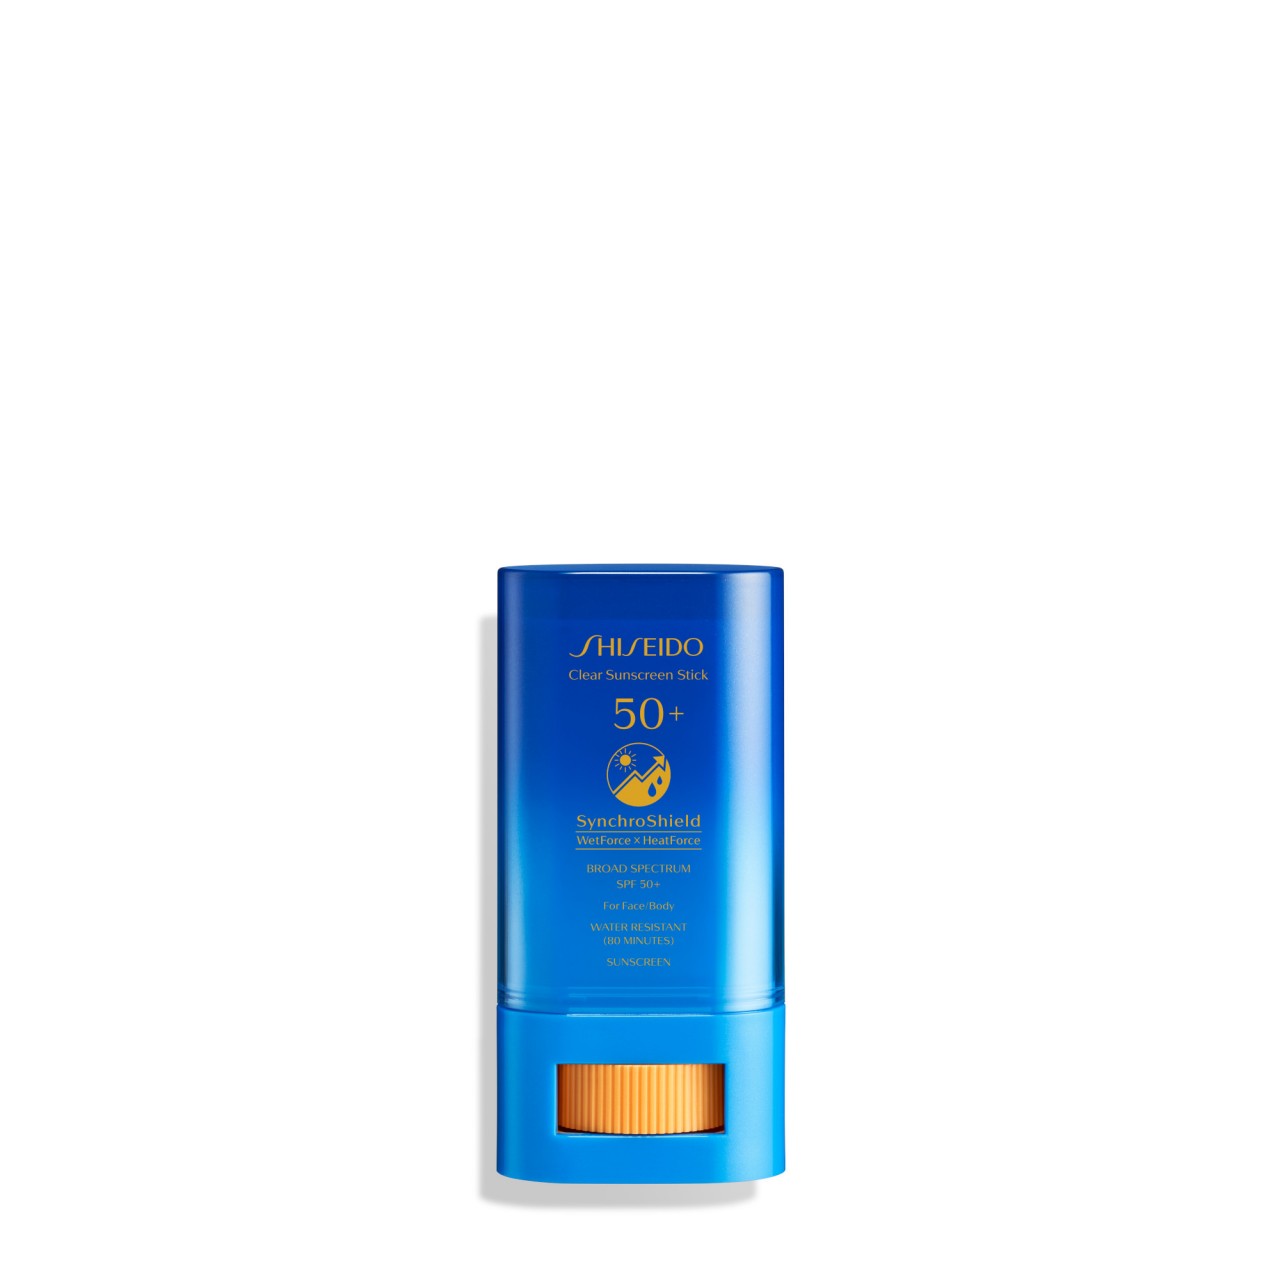 Shiseido Clear Suncare Stick SPF50+